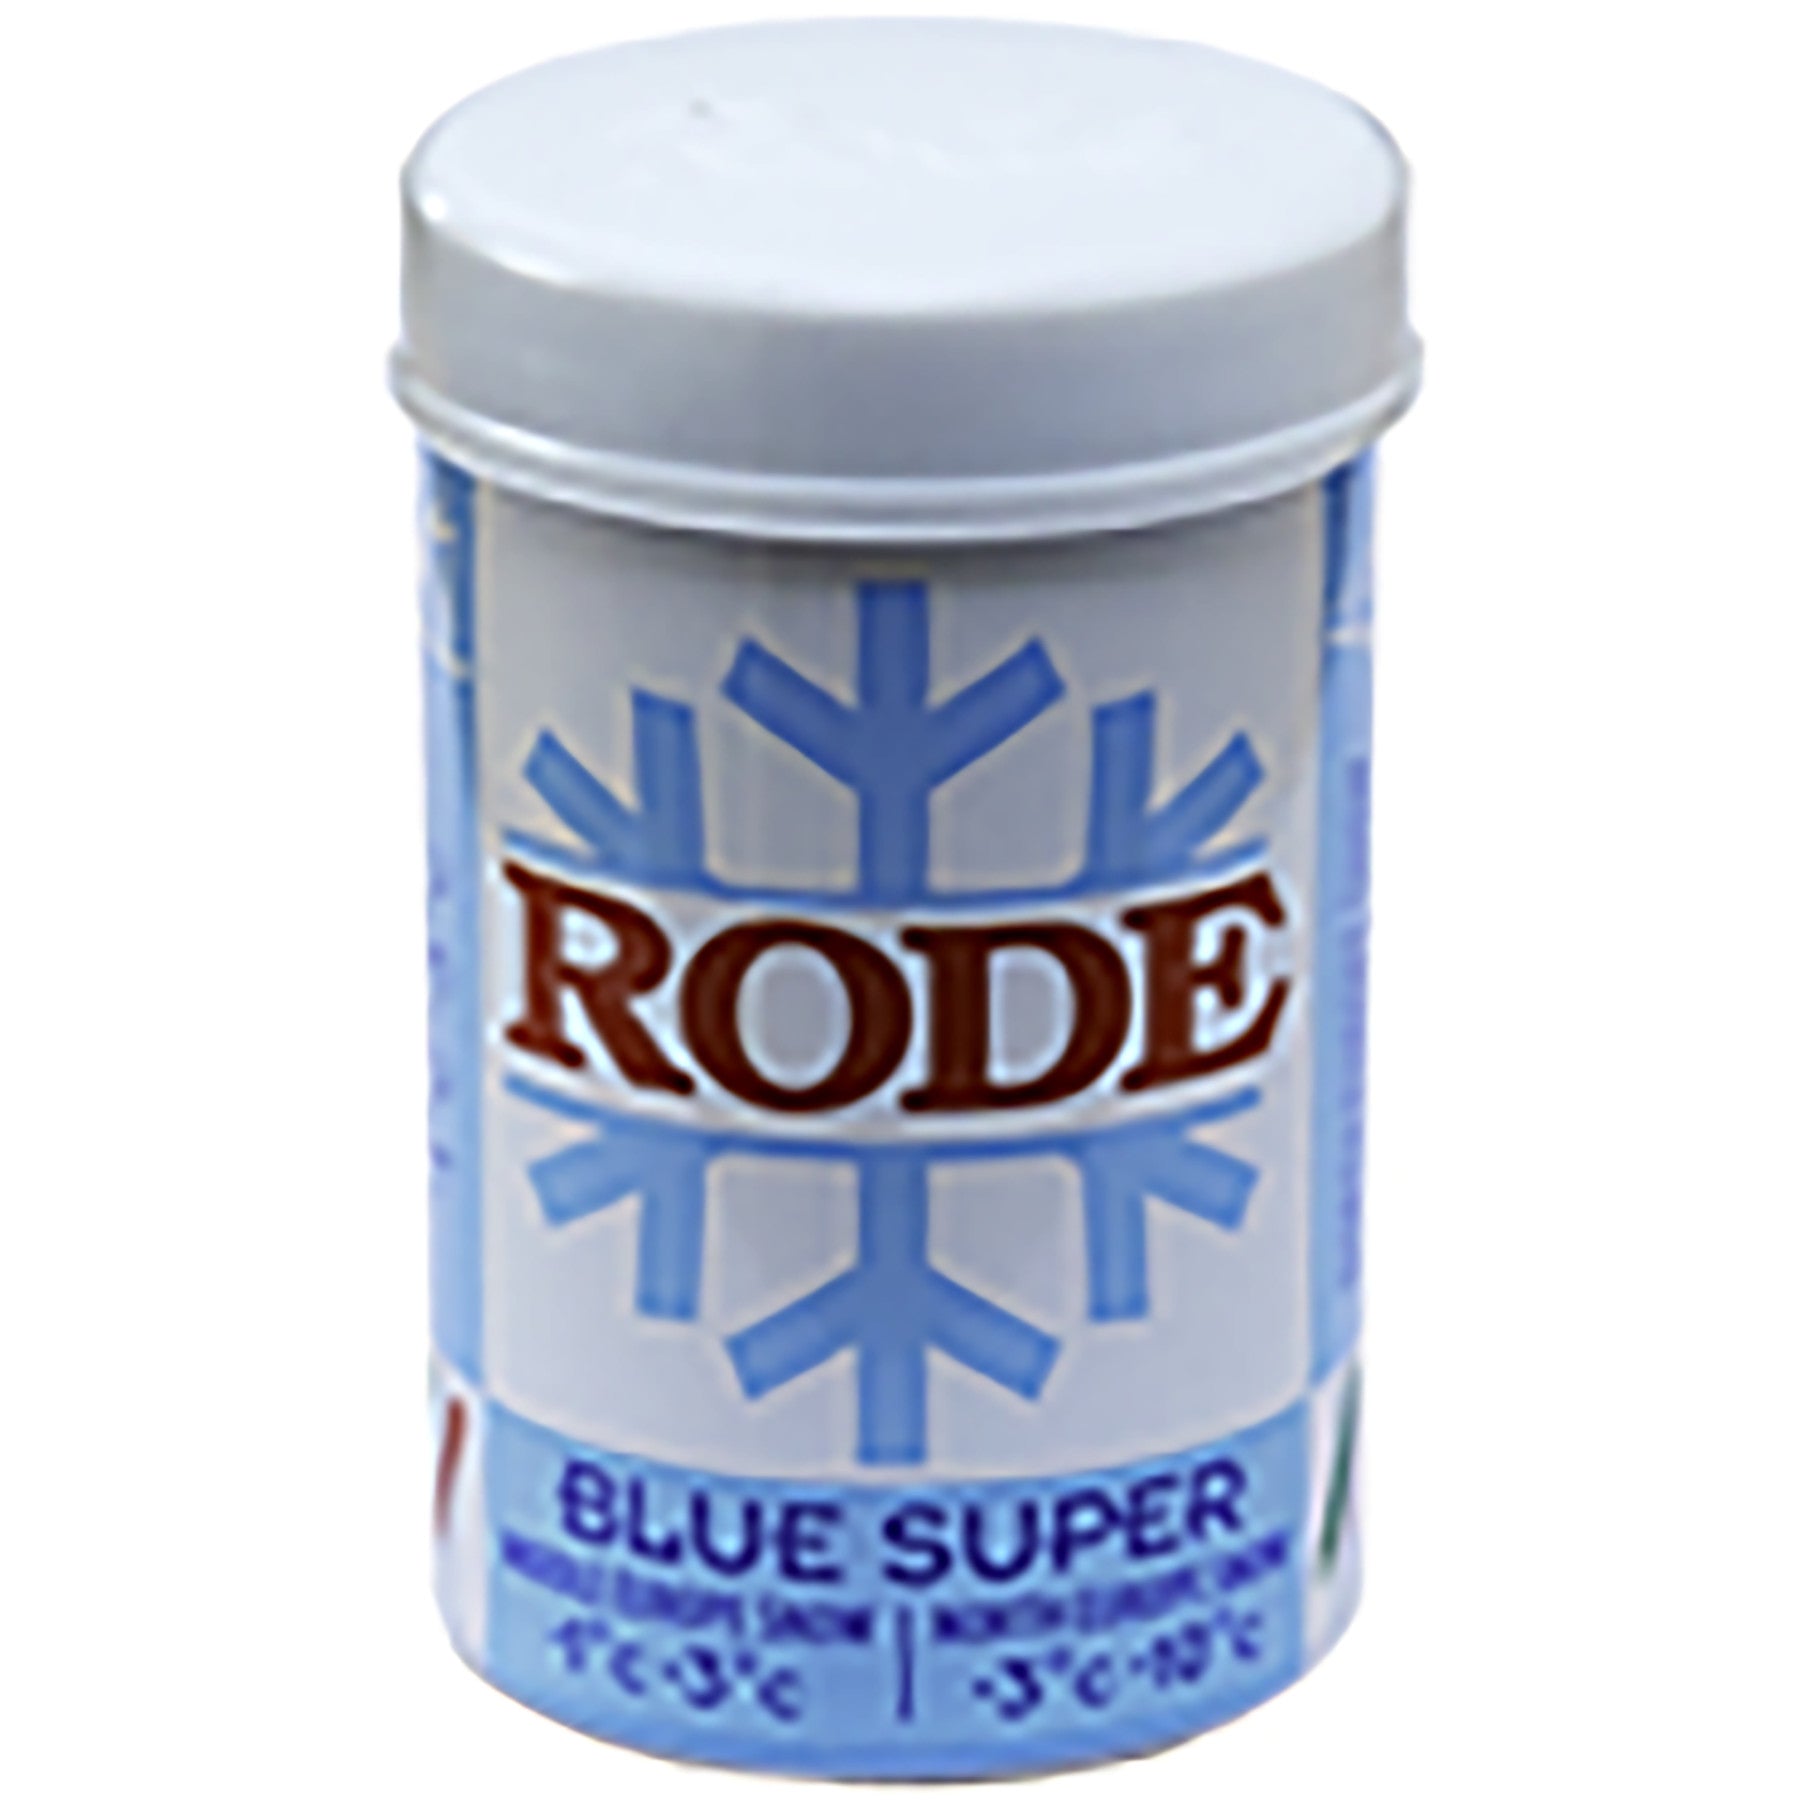 Buy blue-super Rode Kick Basic